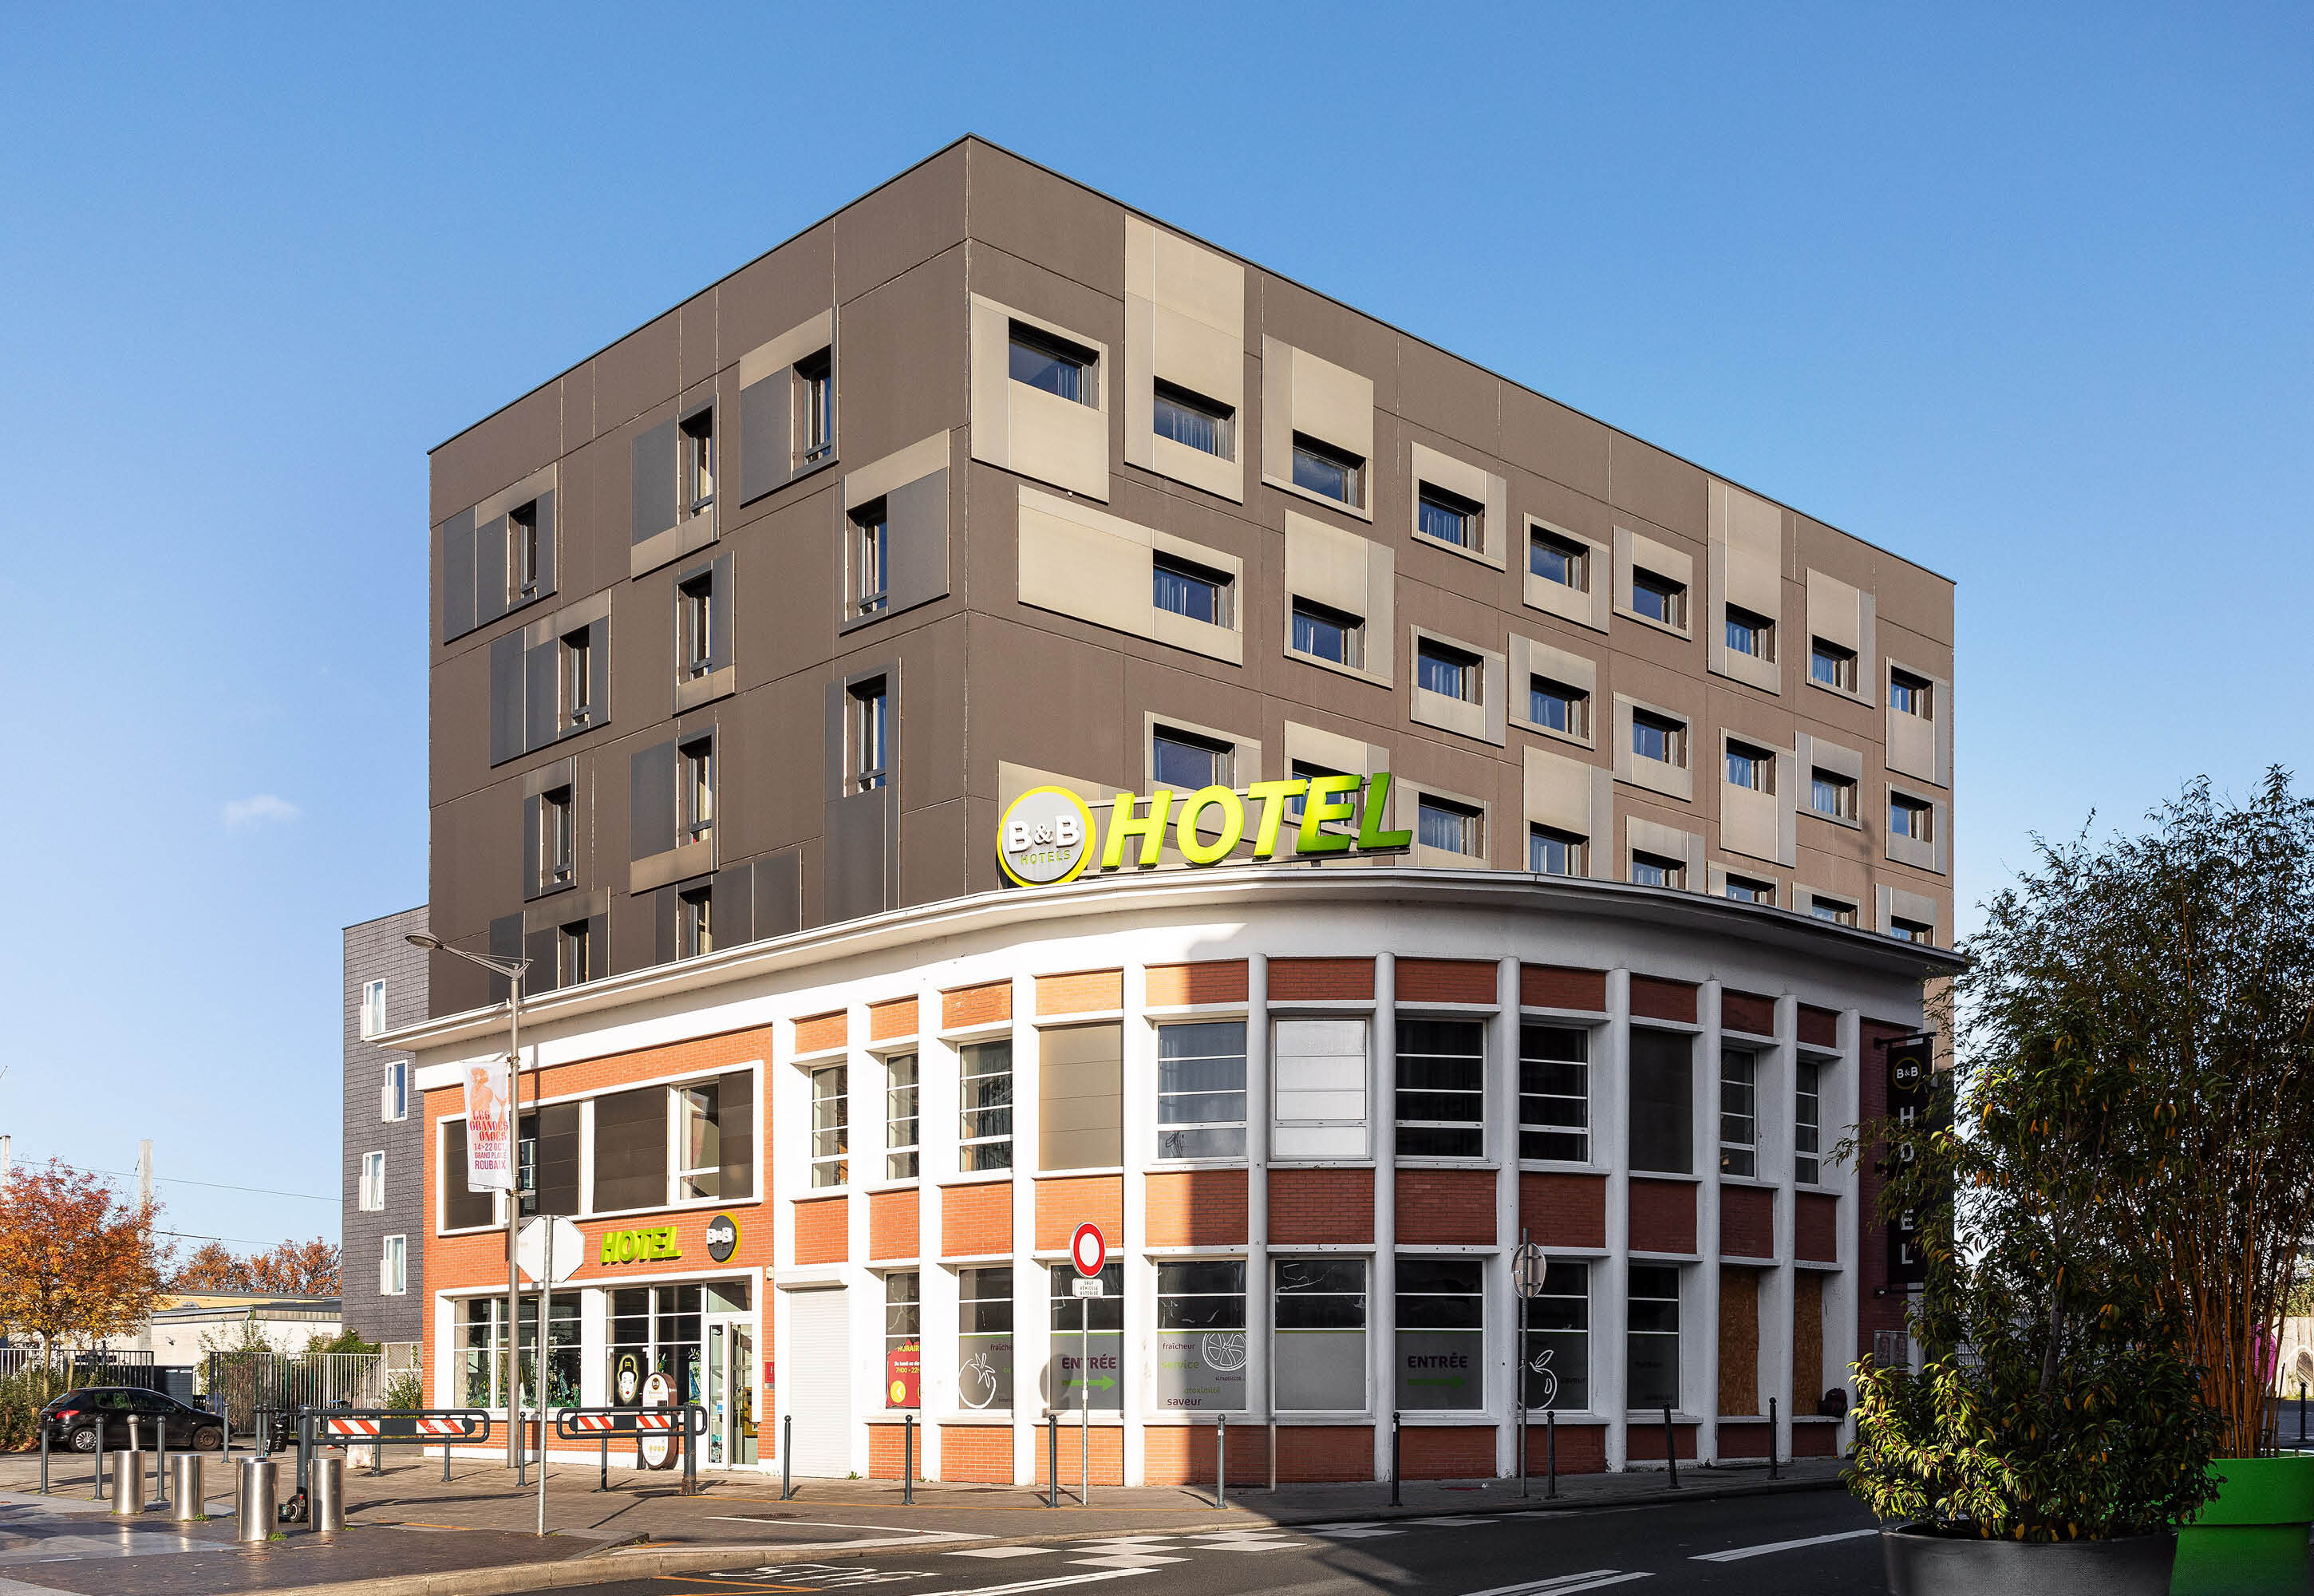 Images B&B HOTEL Lille Roubaix Campus Gare